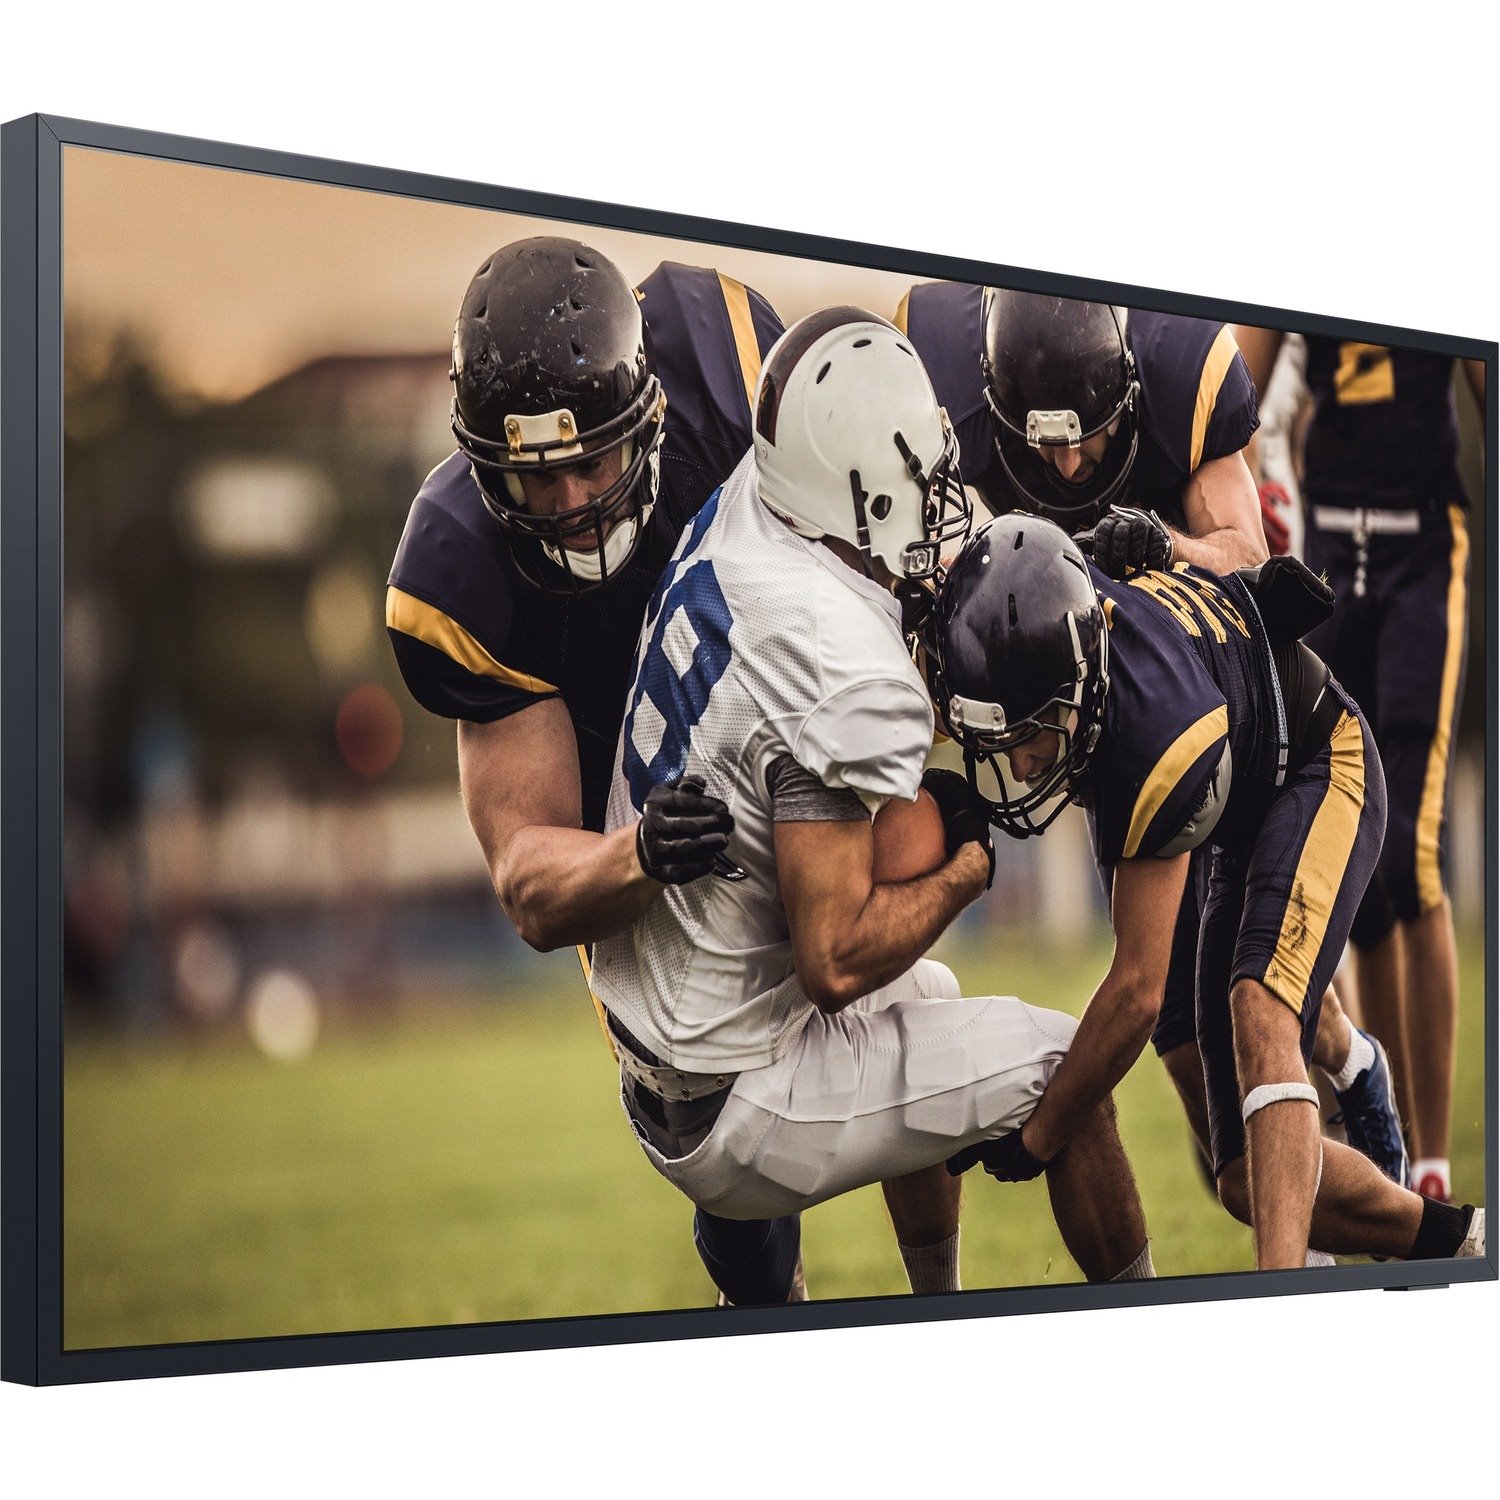 Samsung LH55BHTELGP 190.5 cm Smart LED-LCD TV - 4K UHDTV - Titan Black